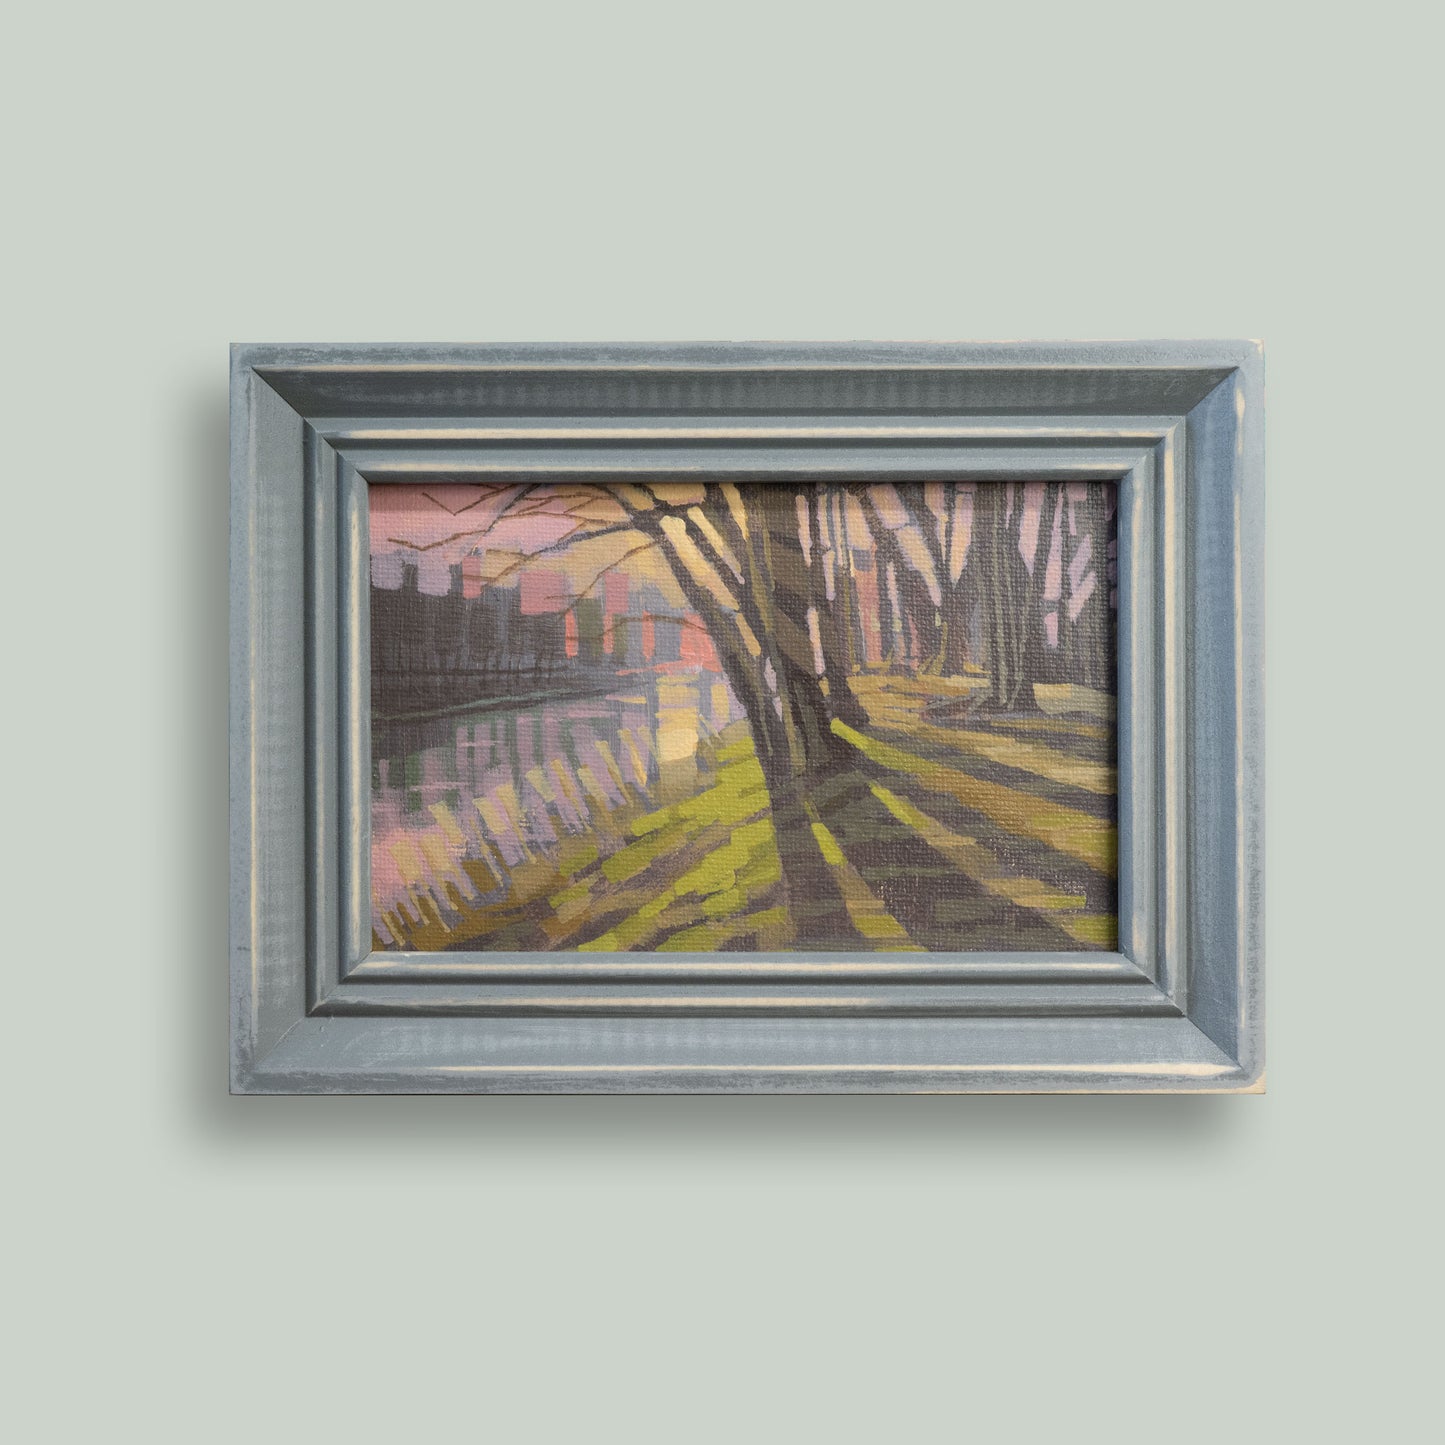 Original painting - "Autumn Light" - hand painted - acrylic painting - 10x15 cm - landscape picture - unique piece - with frame